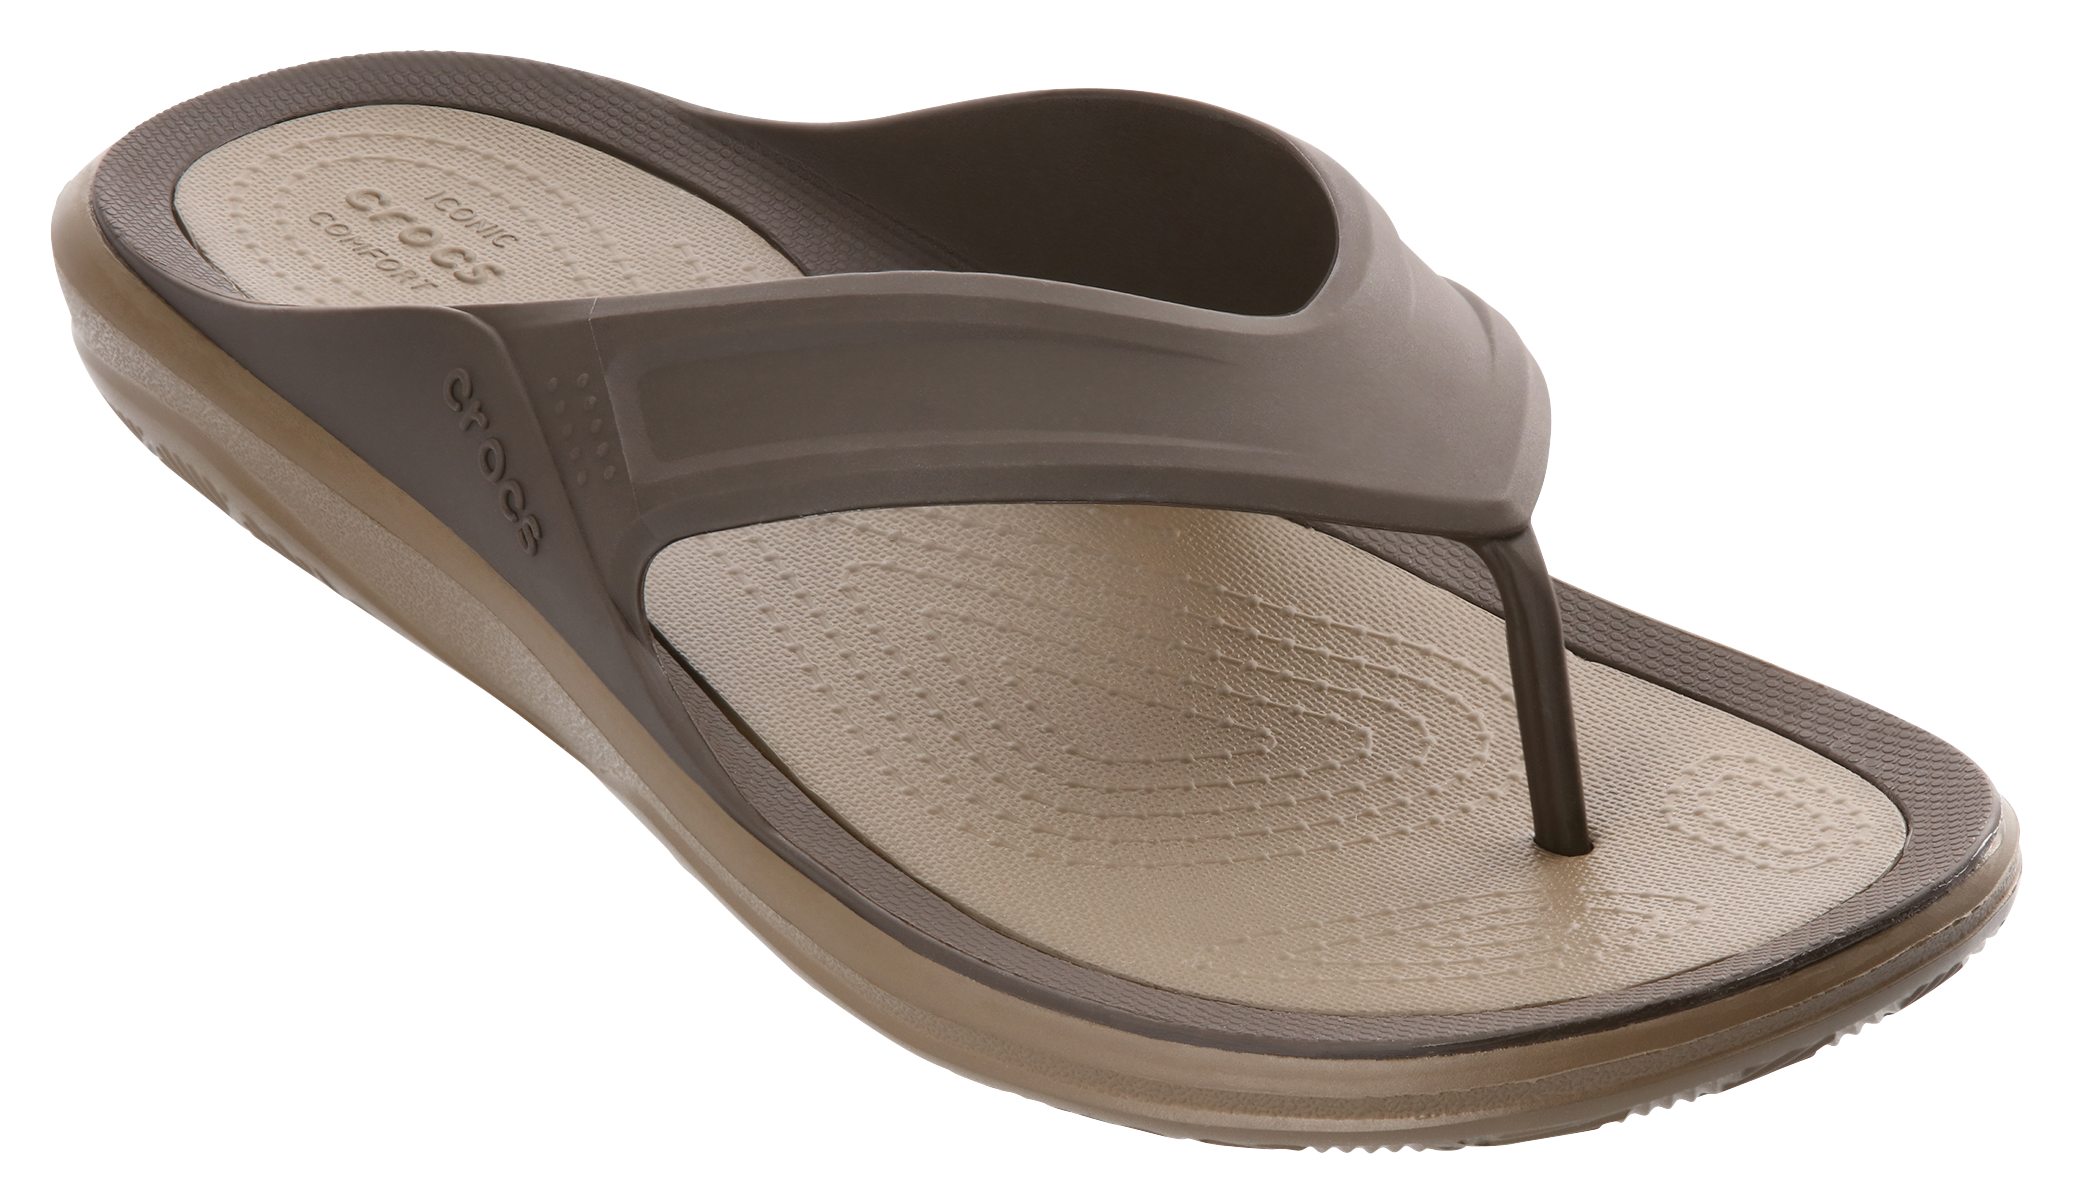 Crocs Swiftwater Wave Flip Thong Sandals for Men - Espresso/Walnut - 11M